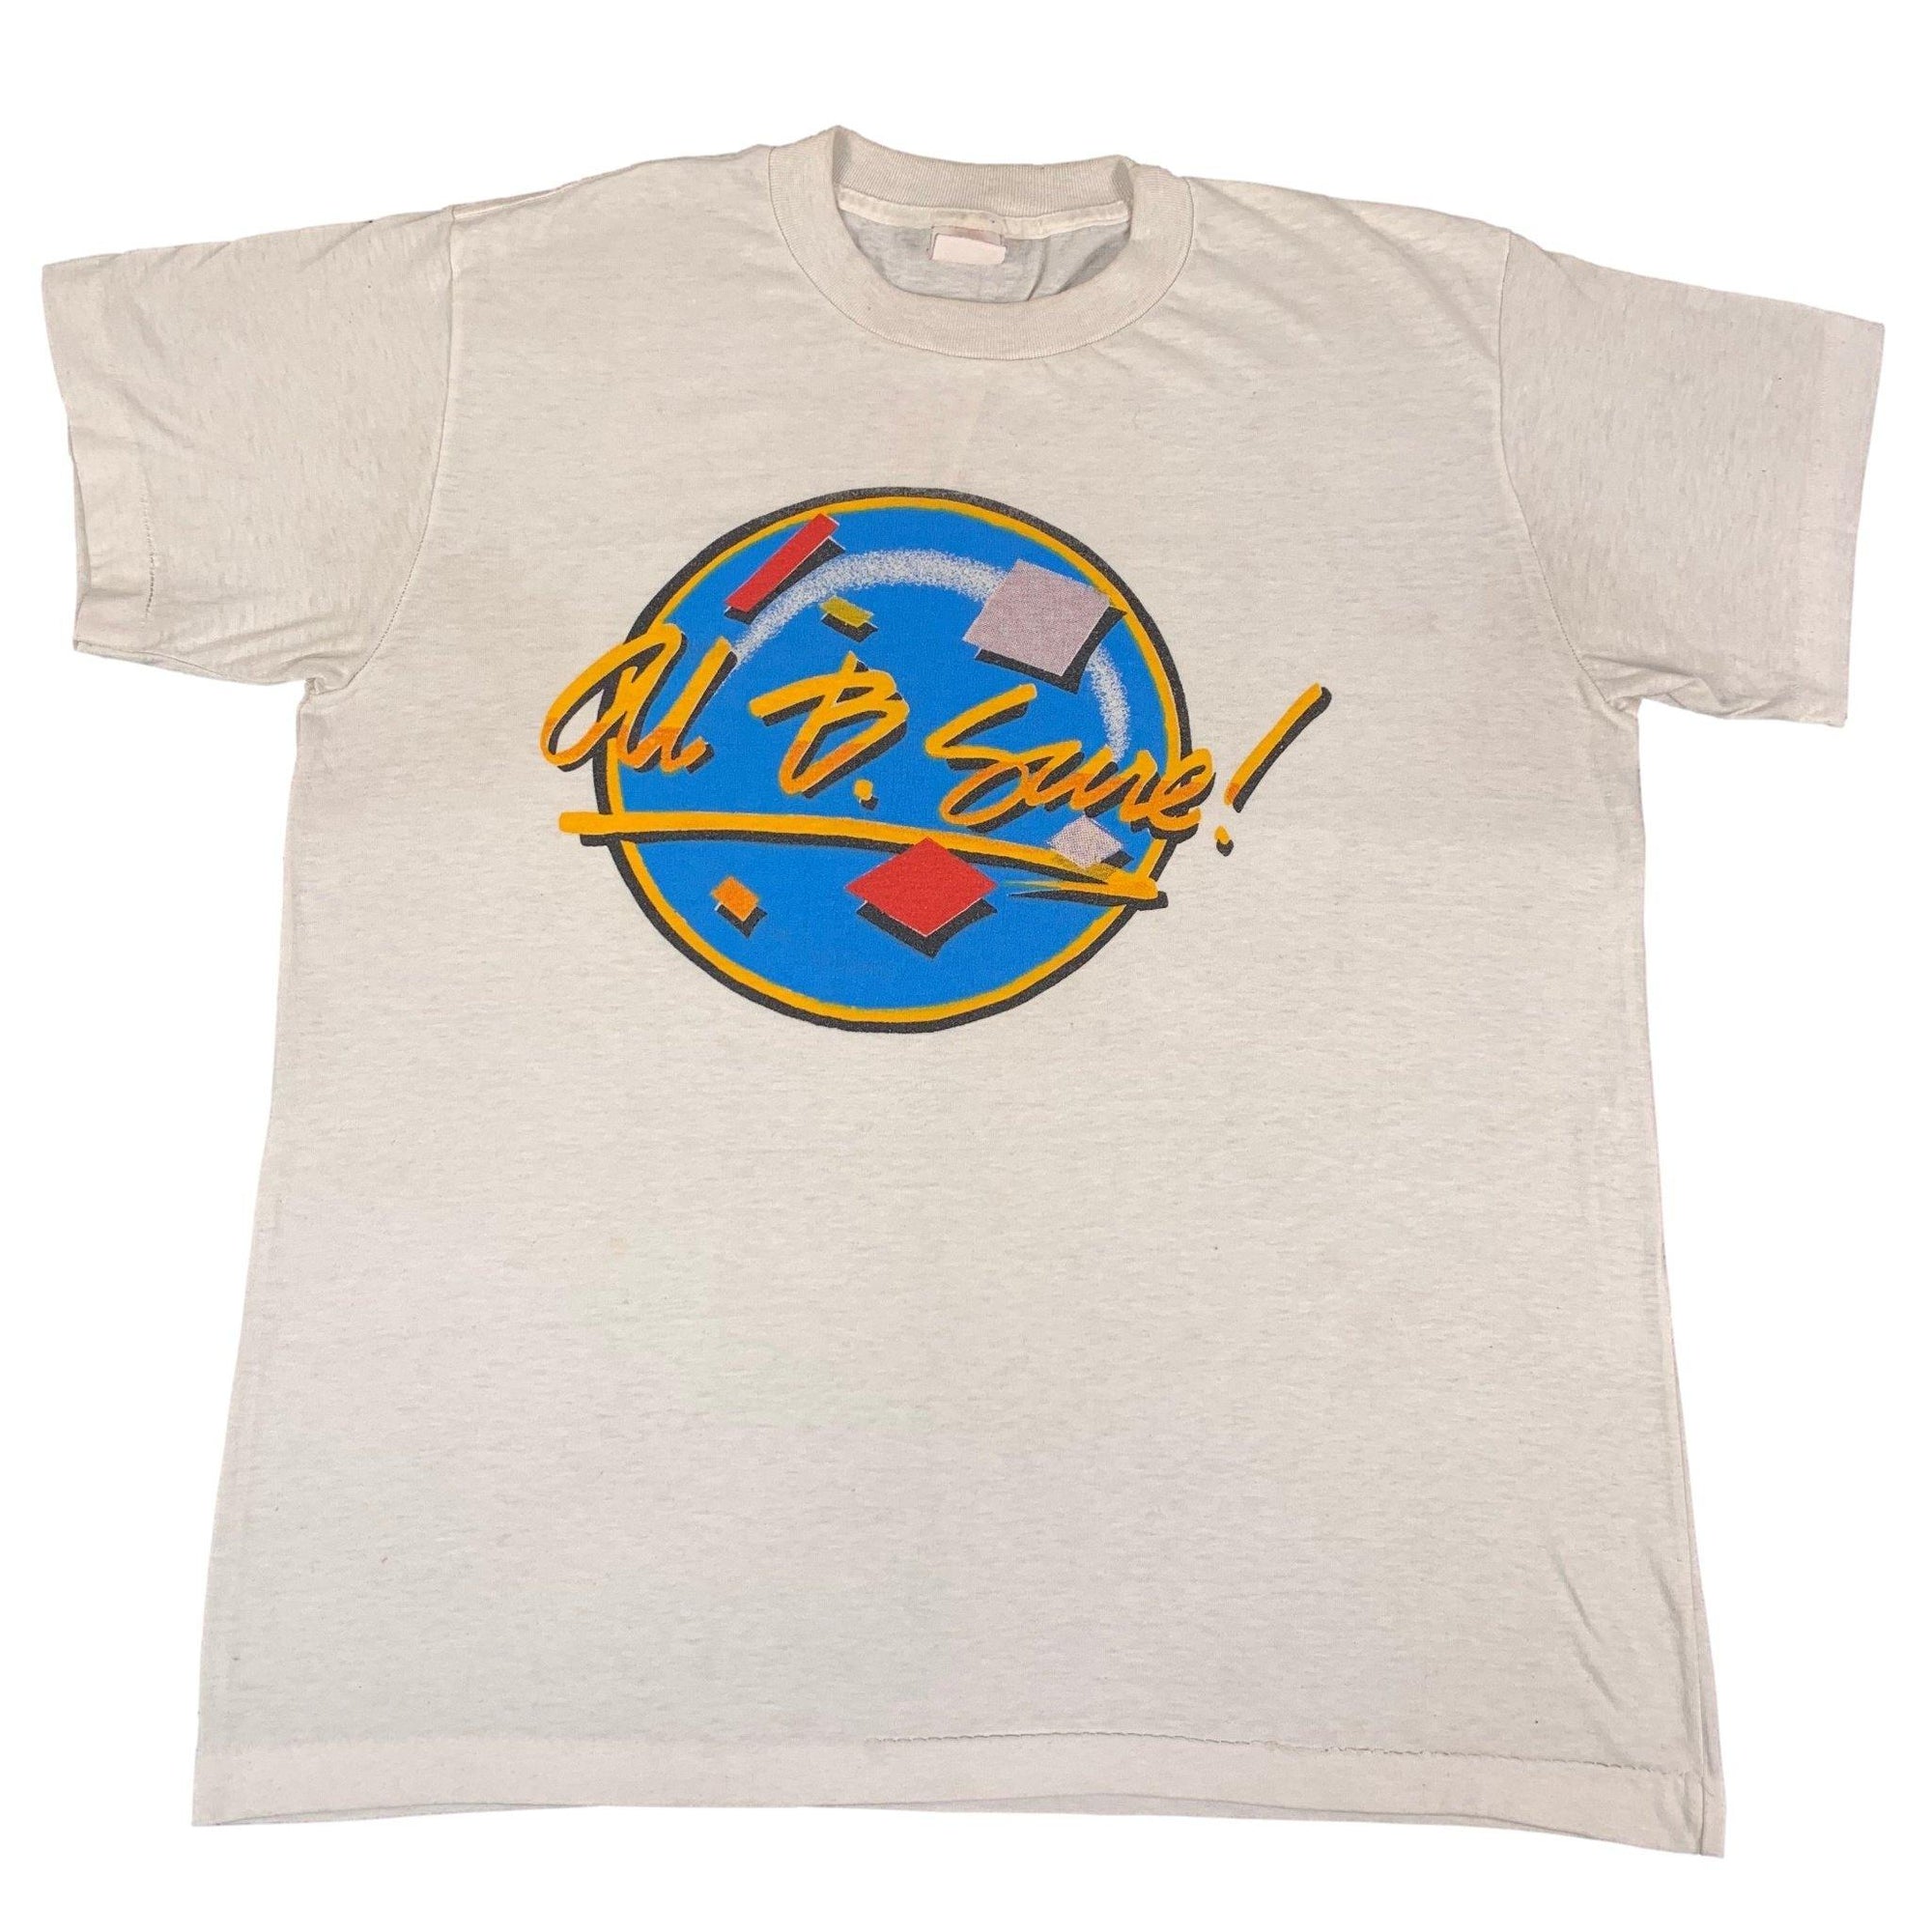 Vintage Al B. Sure! "In Effect Mode" T-Shirt - jointcustodydc